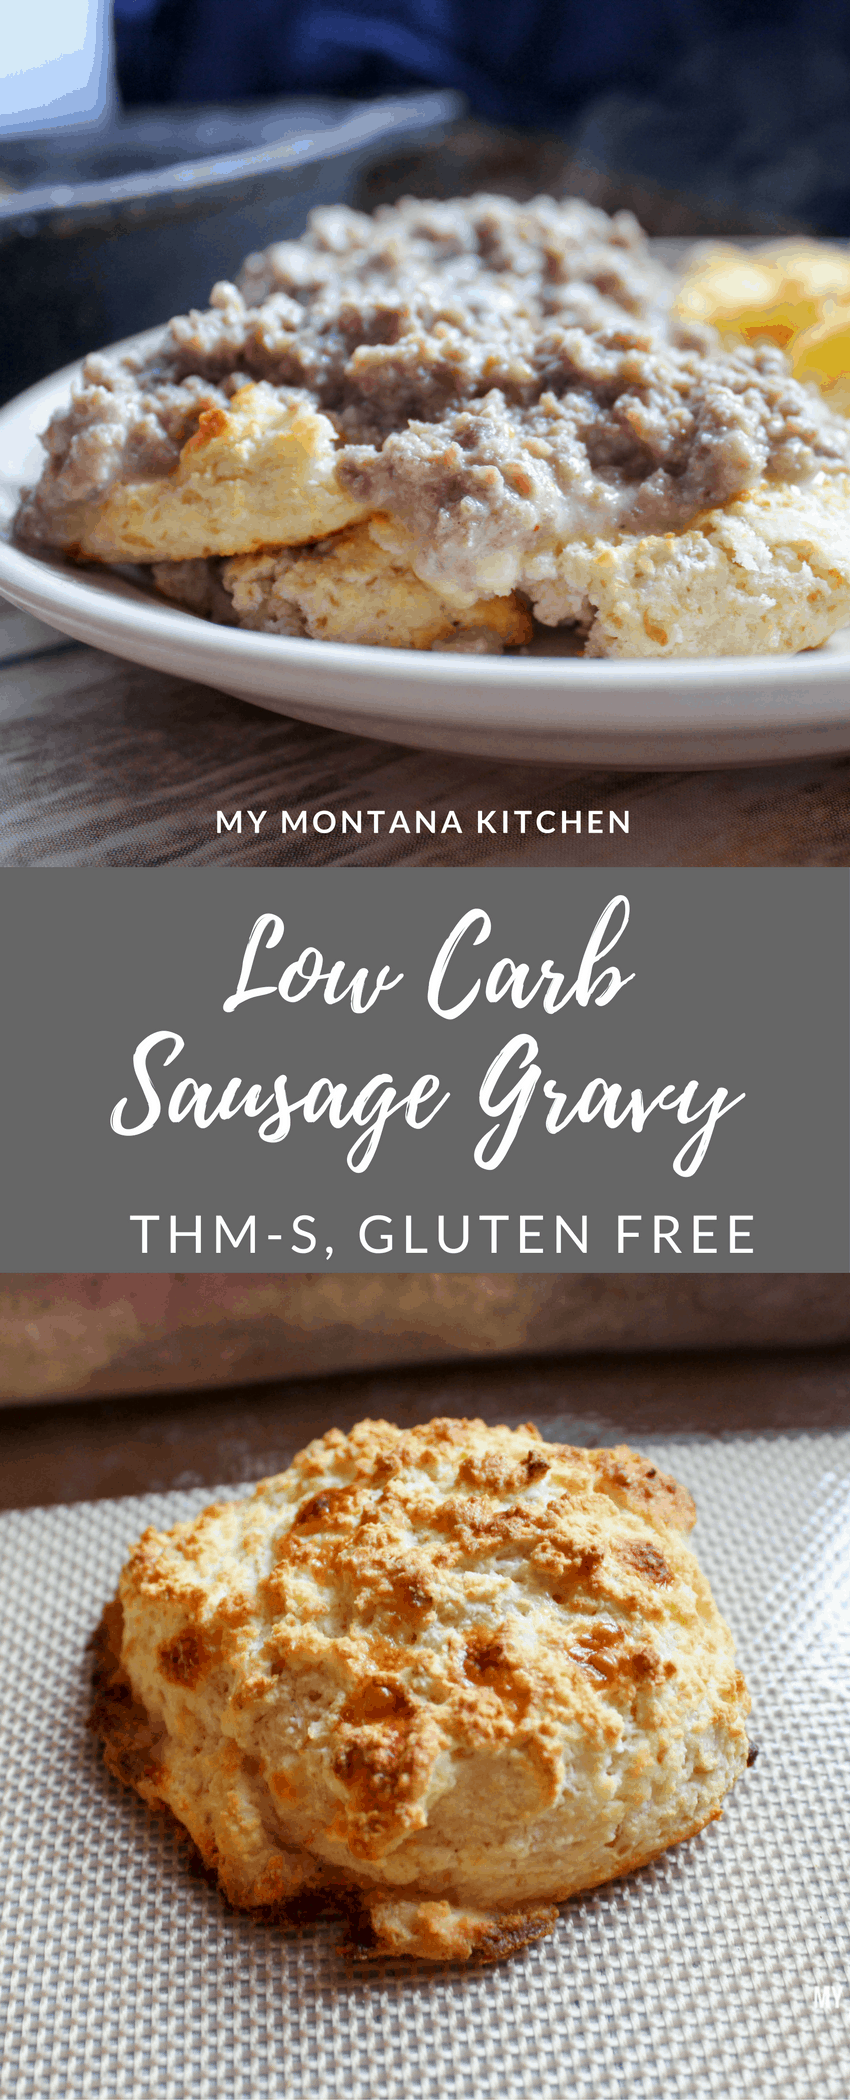 Low Carb Sausage Gravy (THM-S, Gluten Free) #trimhealthymama #thm #thm-s #lowcarb #lowcarbgravy #sausage #sausagegravy #mymontanakitchen